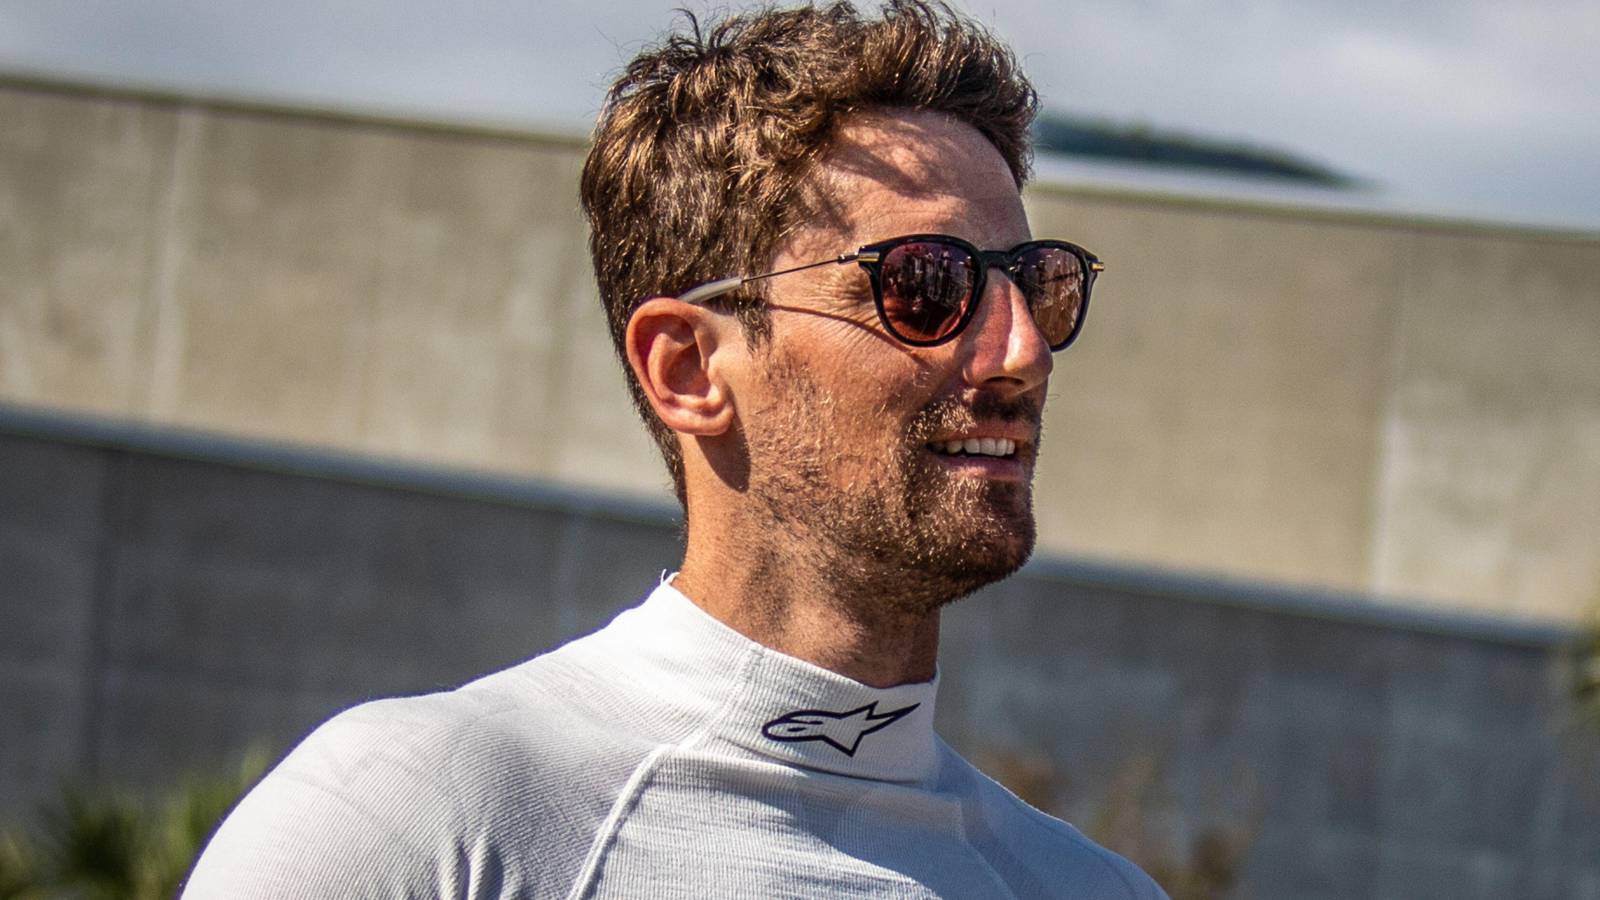 Ex F1 driver Romain Grosjean wearing sunglasses. United States, February 2022.